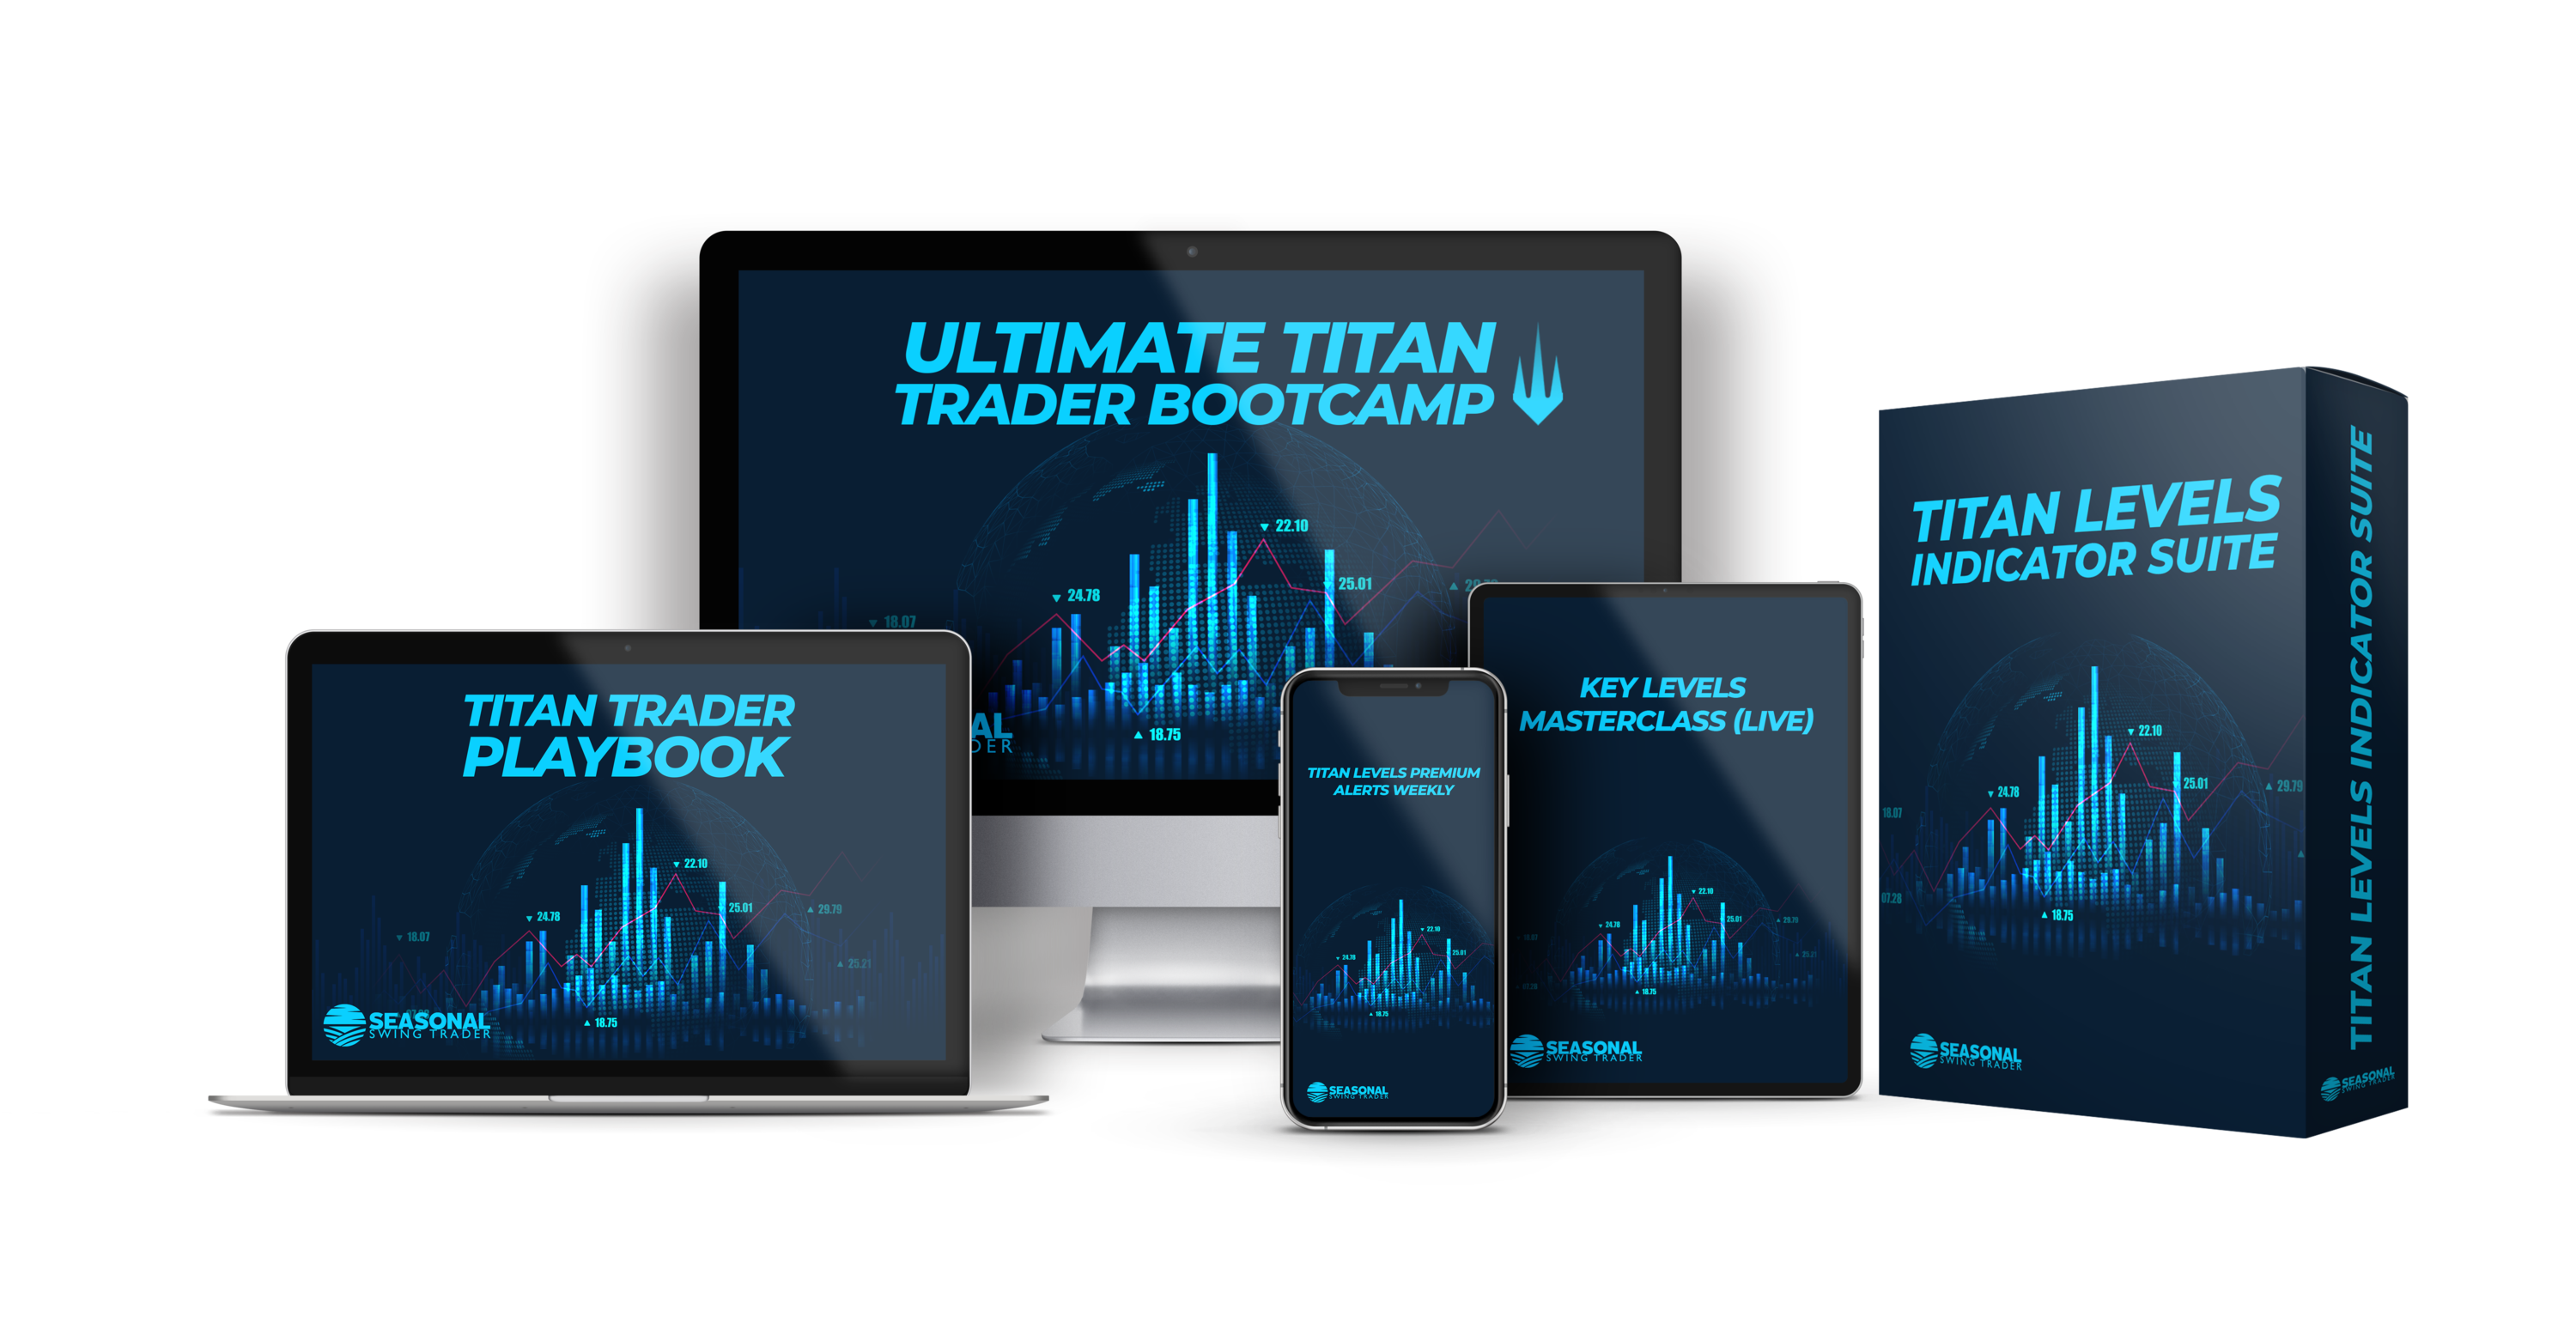 Seasonalswingtrader - Ultimate Titan Trader Bootcamp